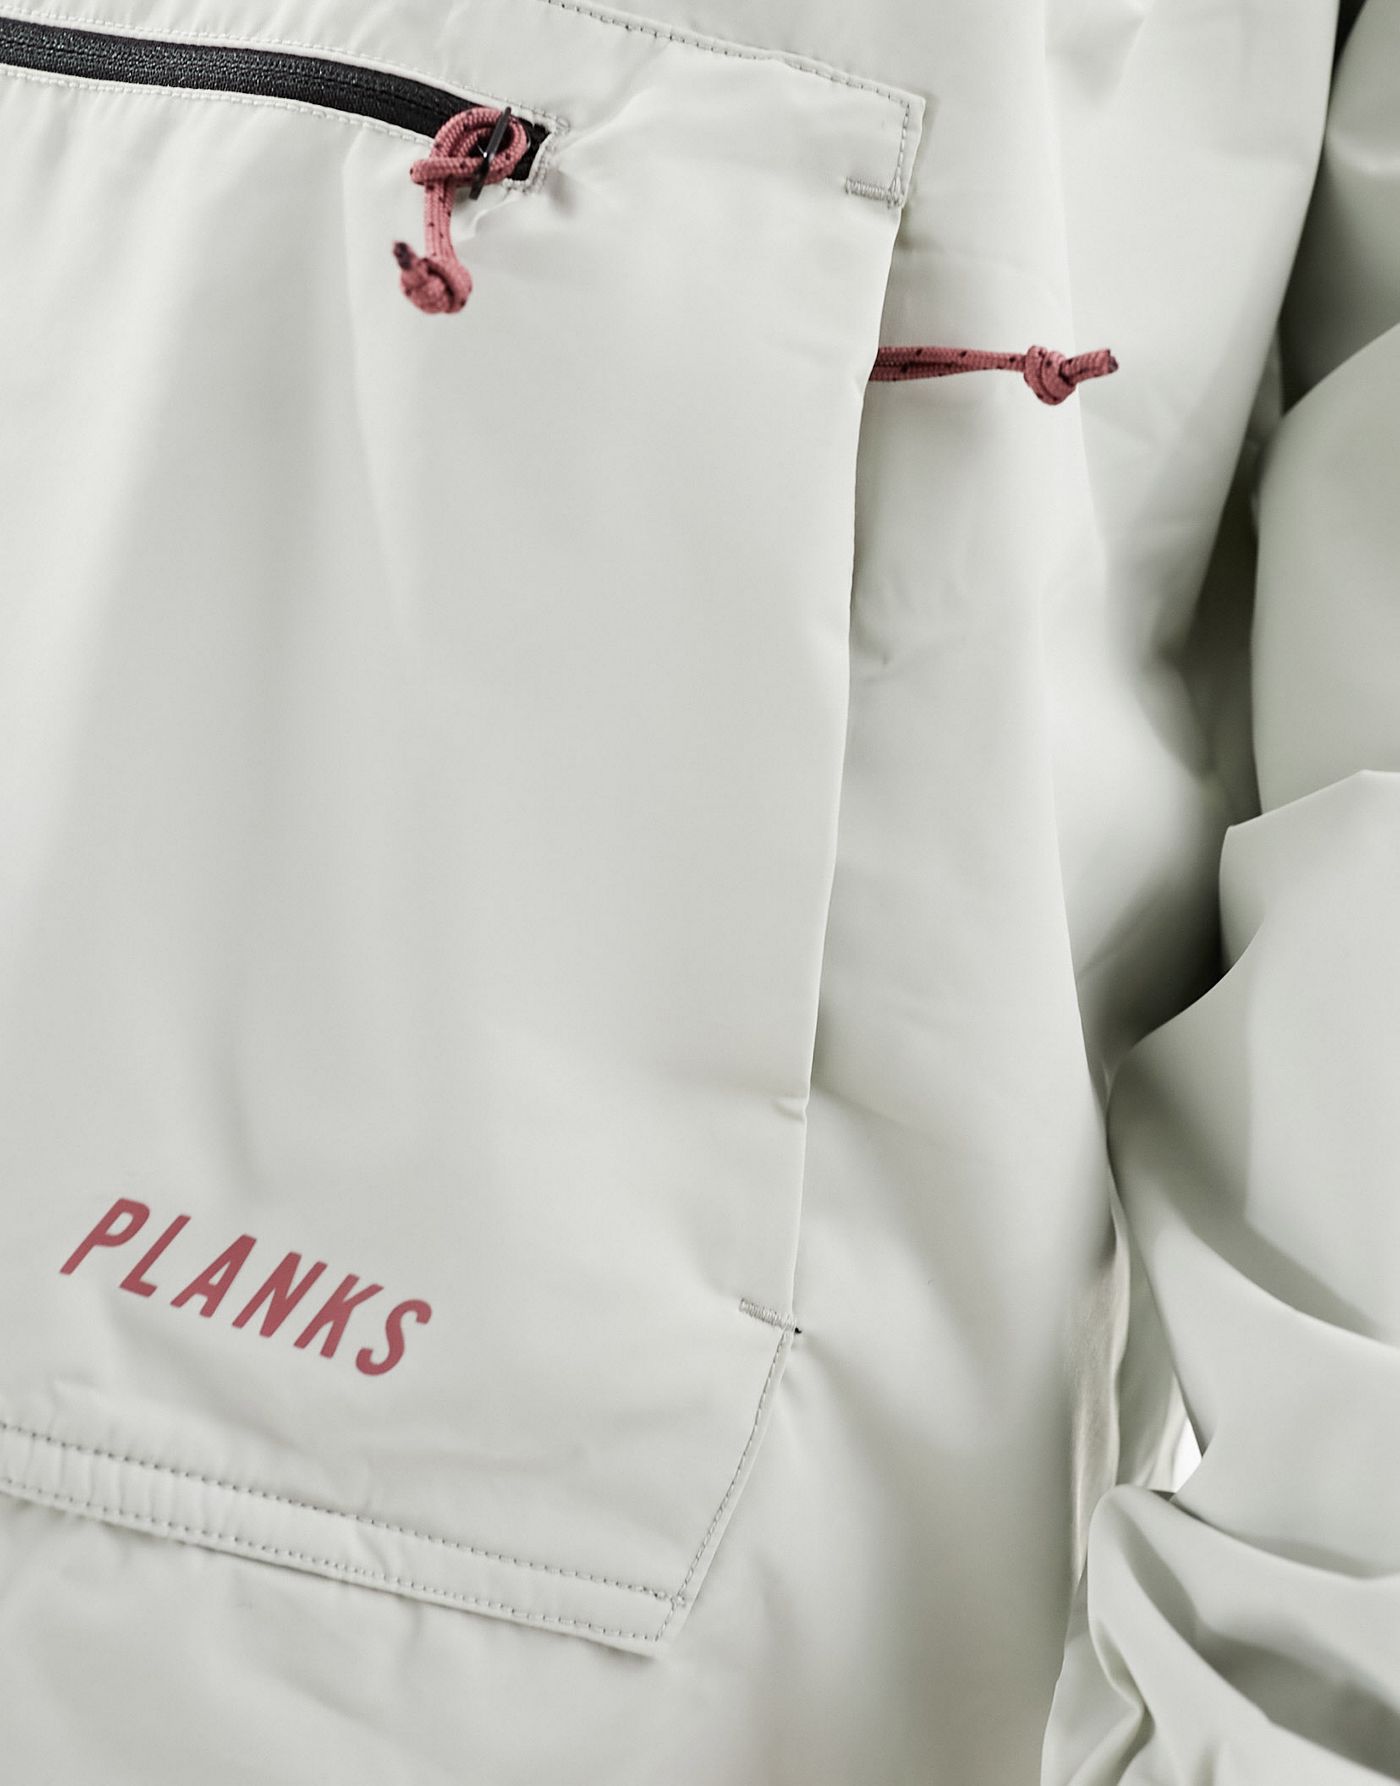 Planks gateway smock unisex jacket in bone white